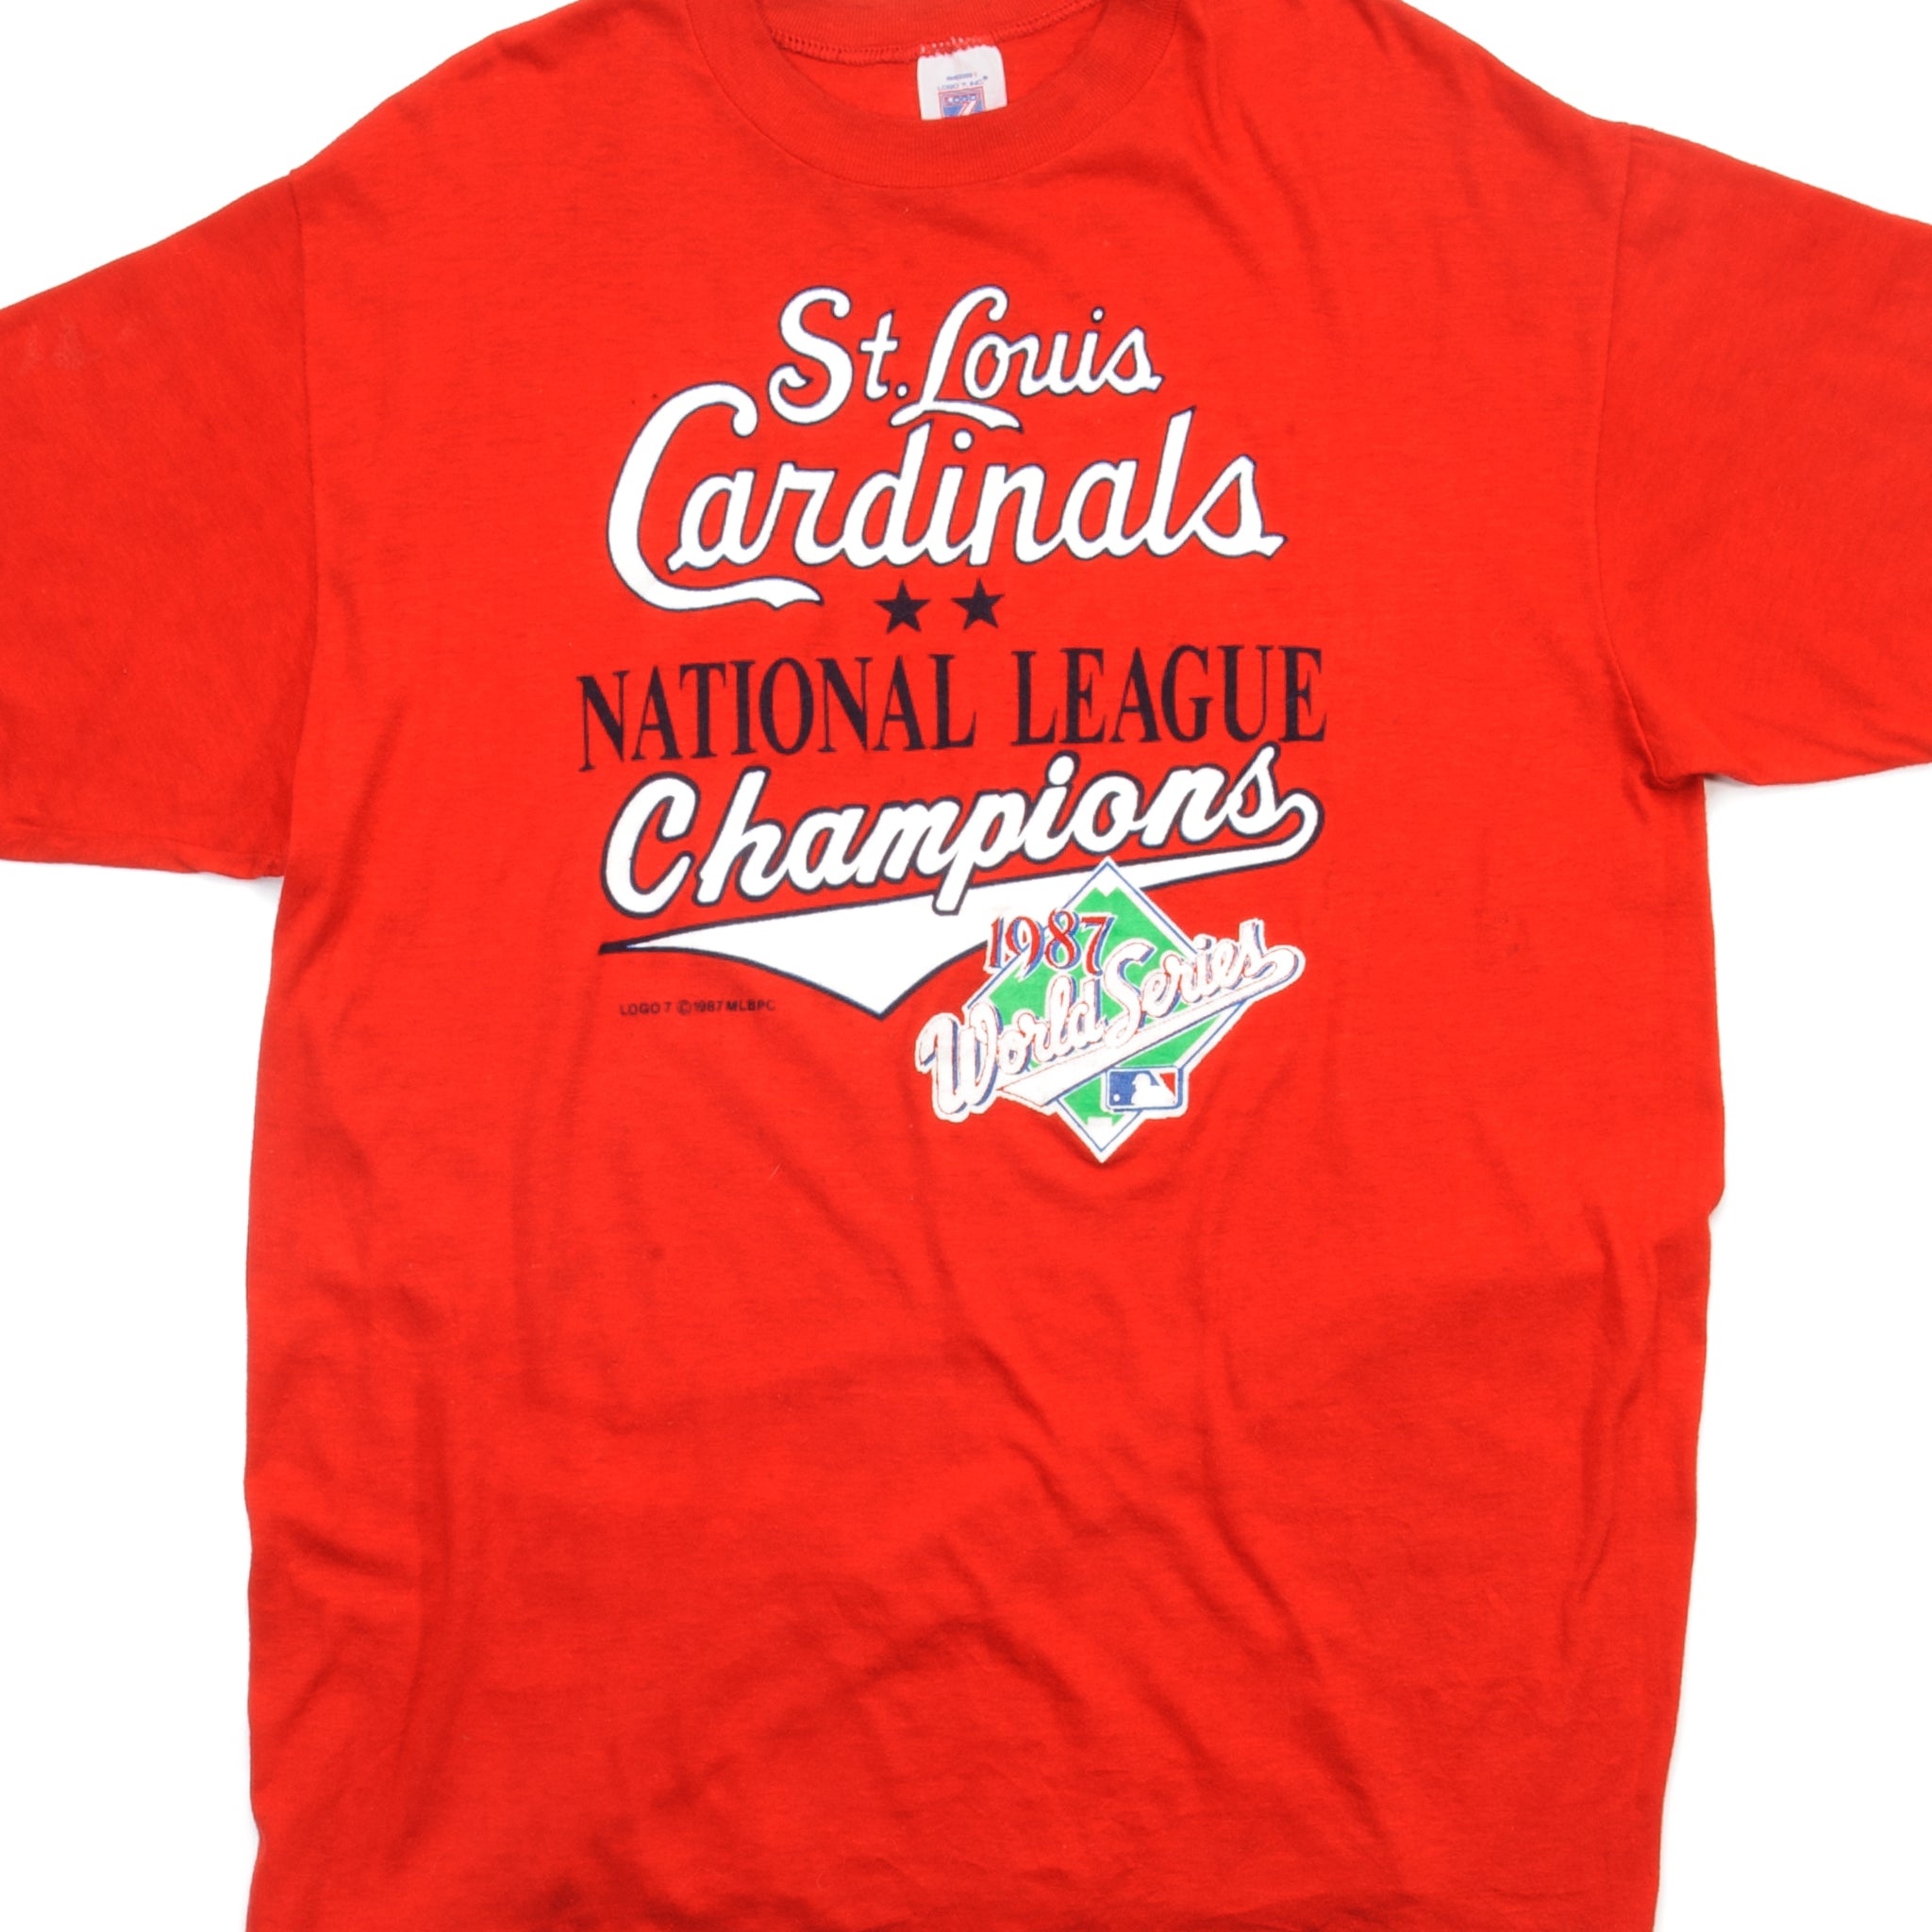 St. Louis Cardinals Dressed to Kill Red T-Shirt - Rocker Tee